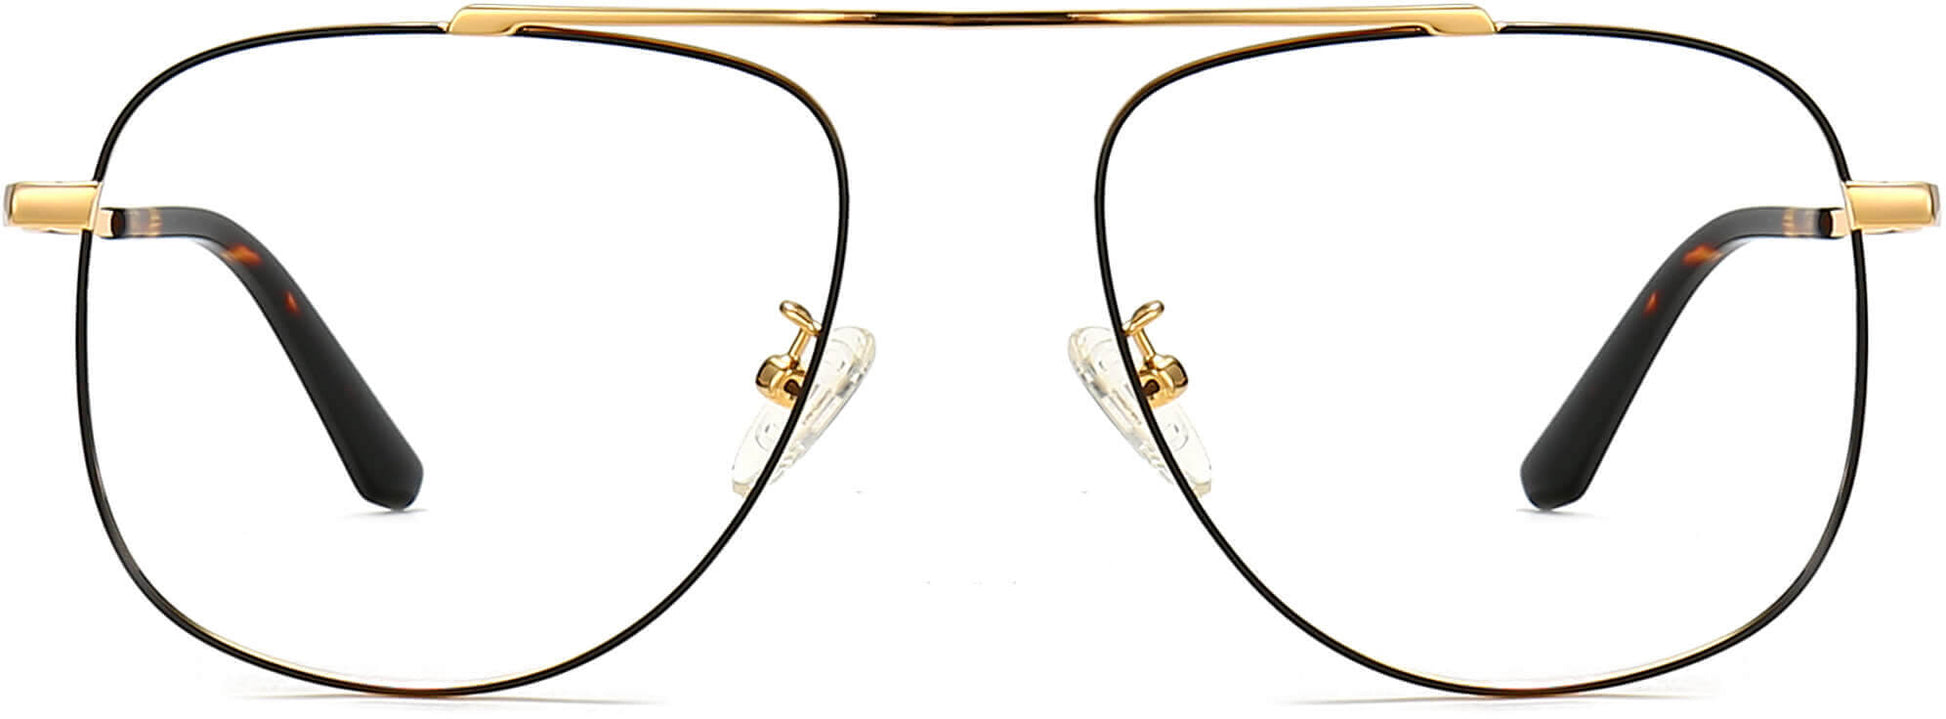 Vanessa Aviator Gold Eyeglasses from ANRRI, front view